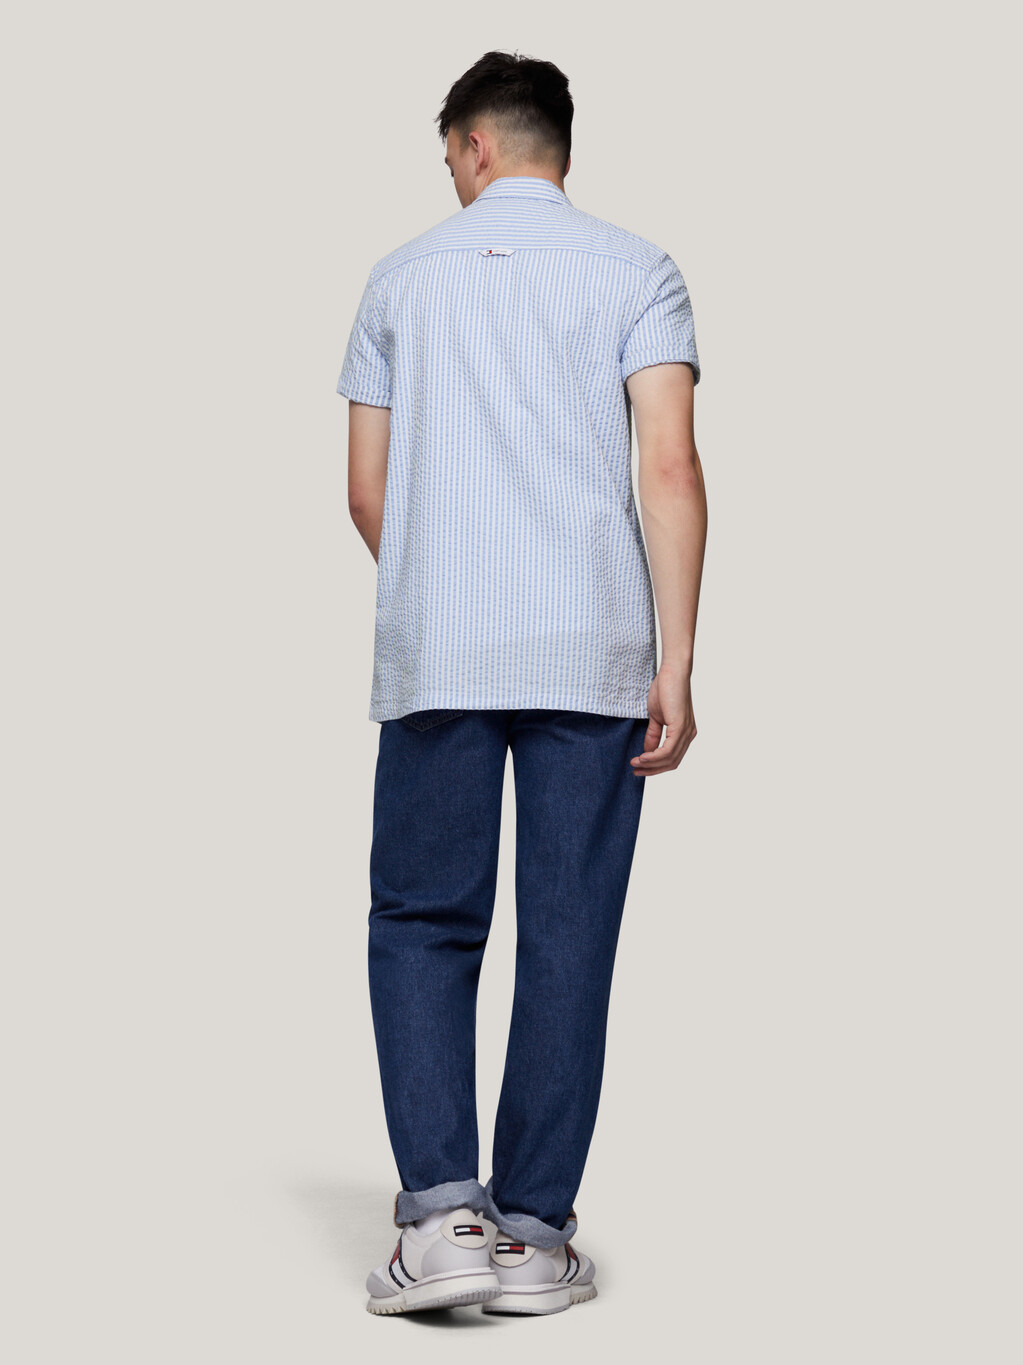 條紋泡泡紗短袖襯衫, White / Moderate Blue, hi-res